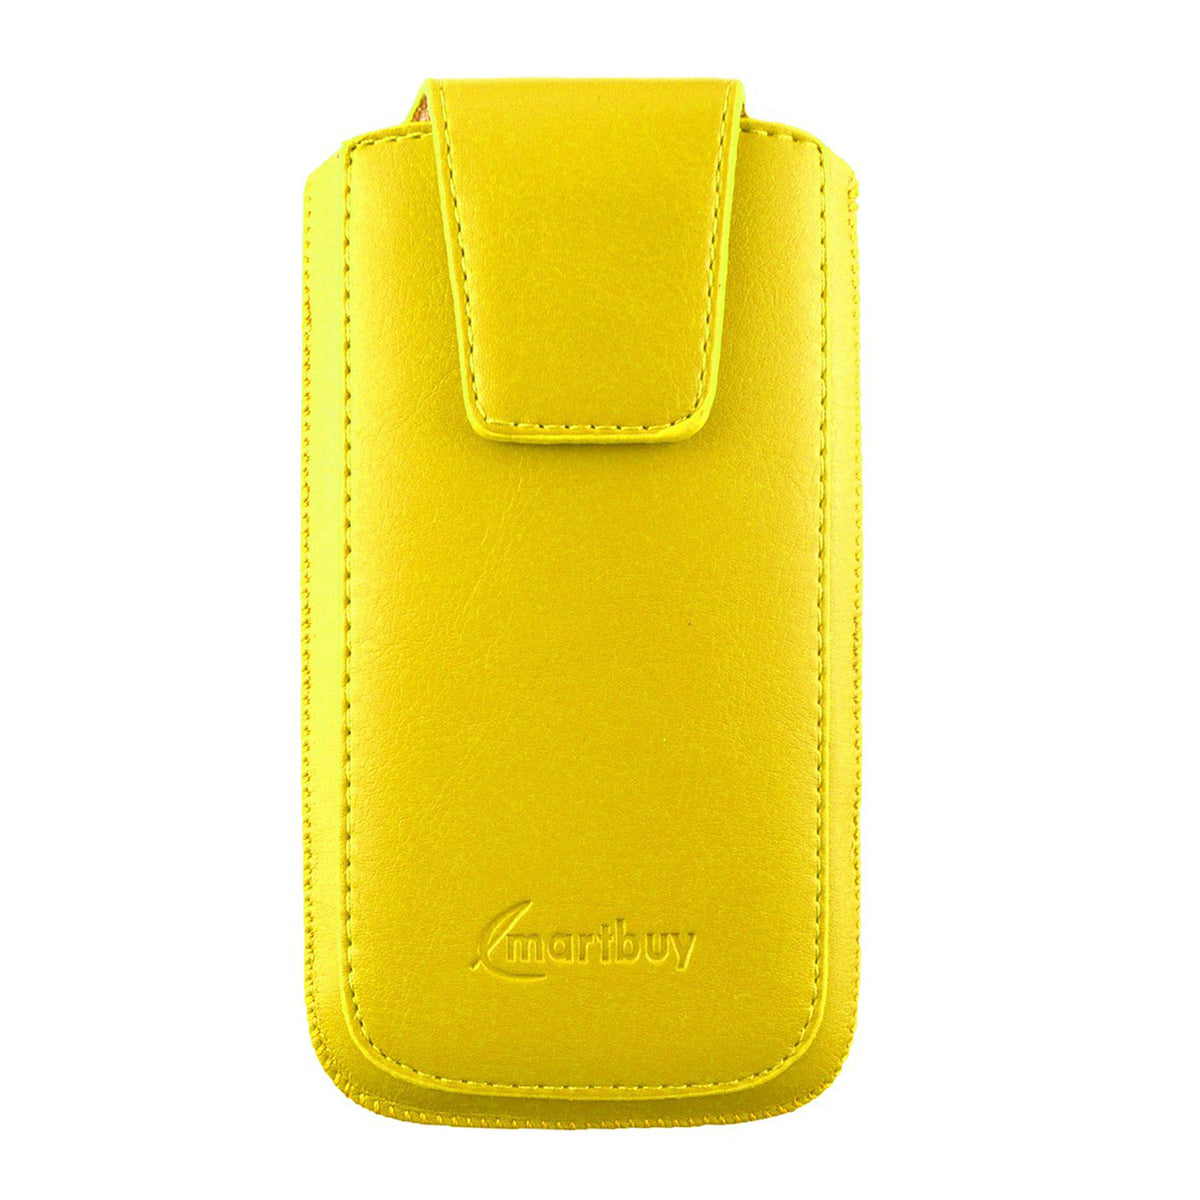 Universal Phone Pouch - Yellow Sleek